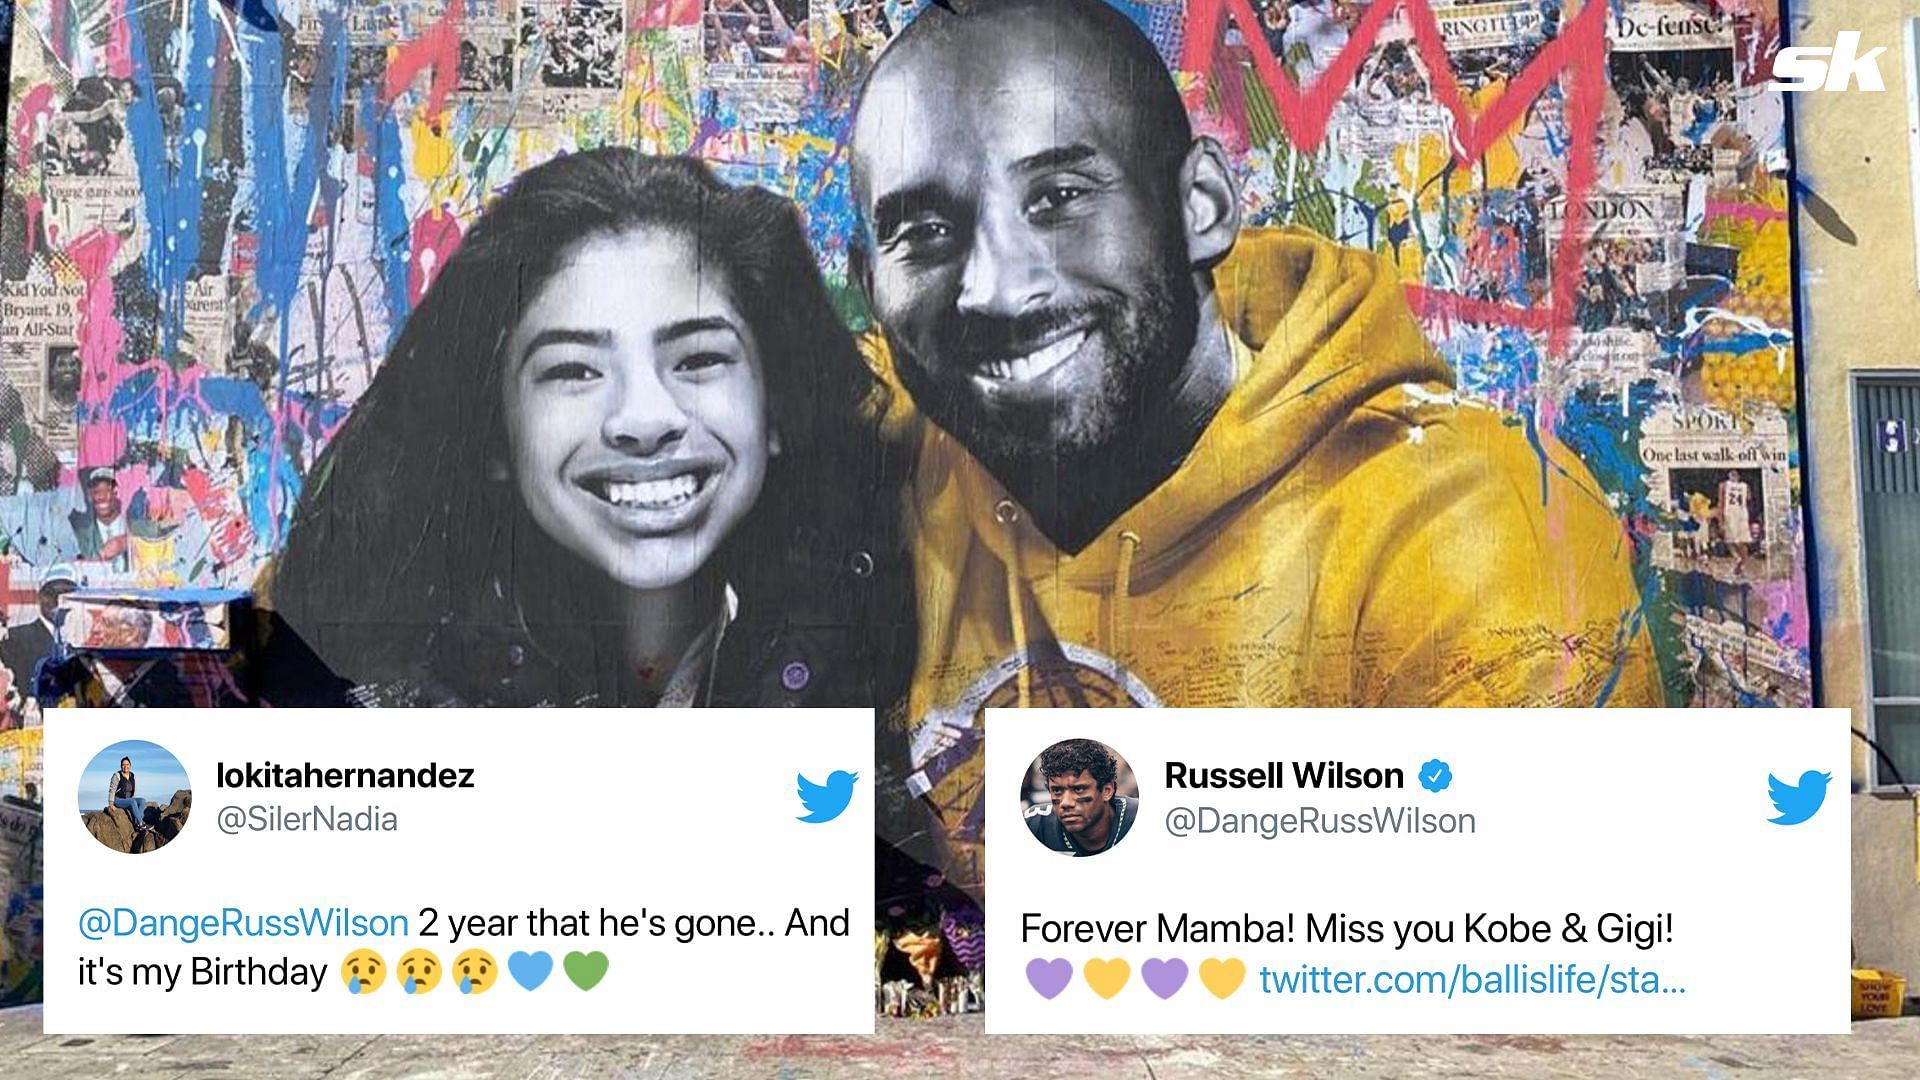 A mural in honor of Gigi and Kobe Bryant (plus tweets from Russell Wilson and lokitahernandez)